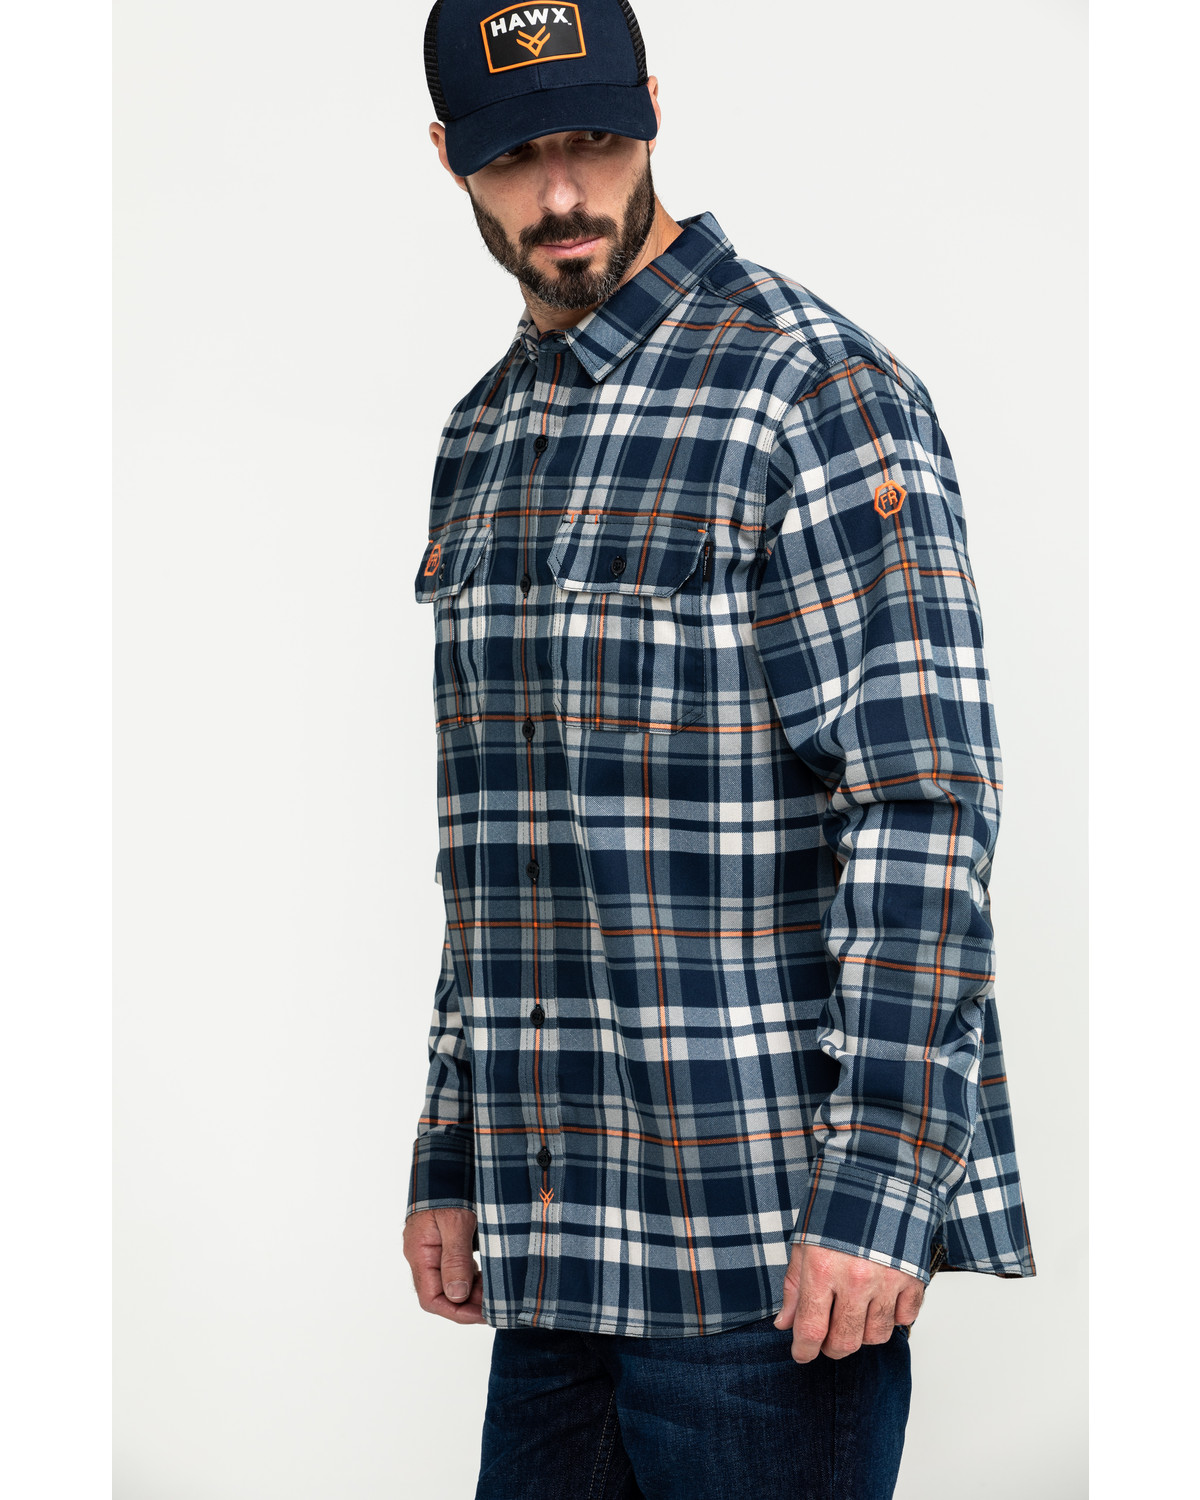 Hawx Men's Blue FR Plaid Long Sleeve Woven Work Shirt - Big | Sheplers